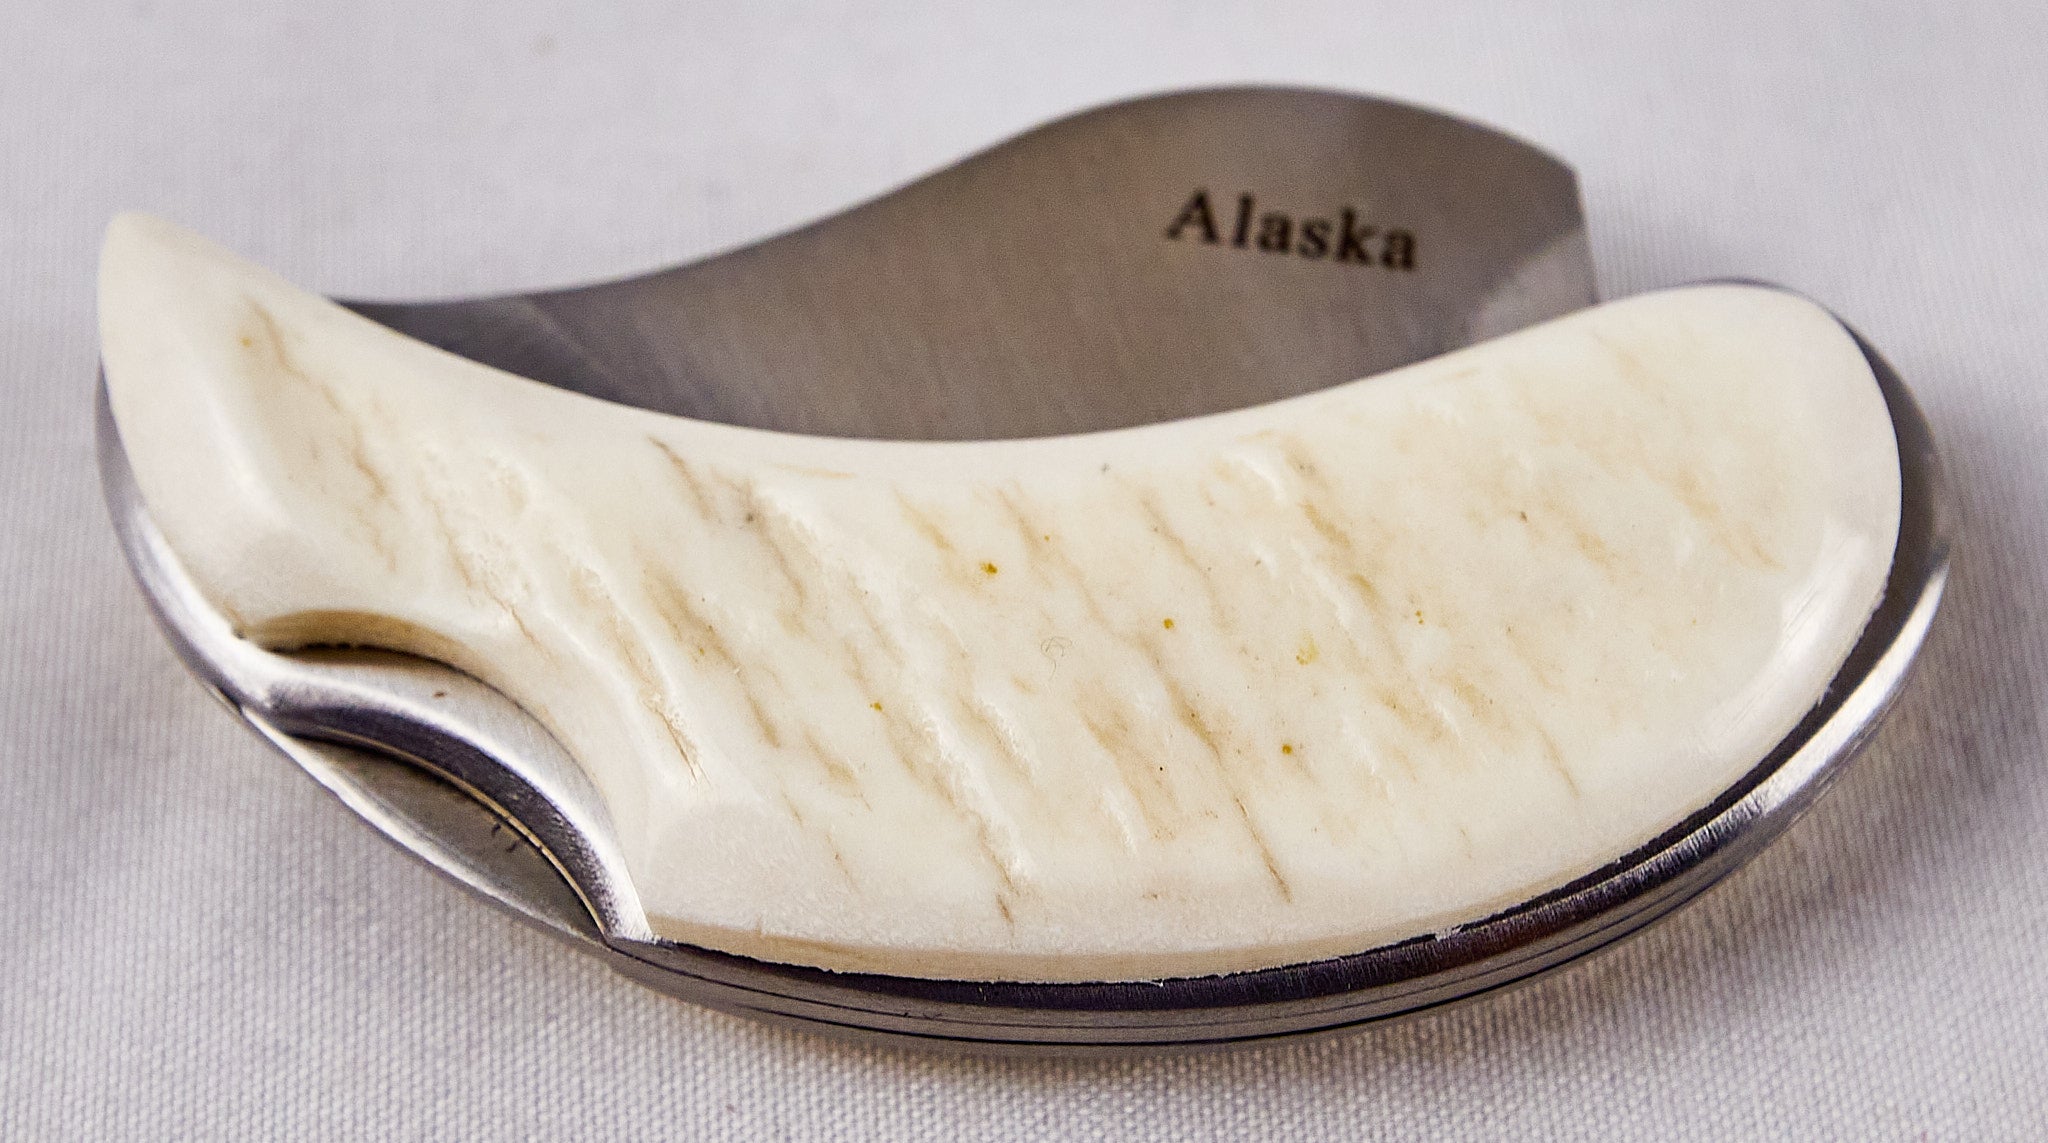 Moose Antler Alaska Pocket Ulu